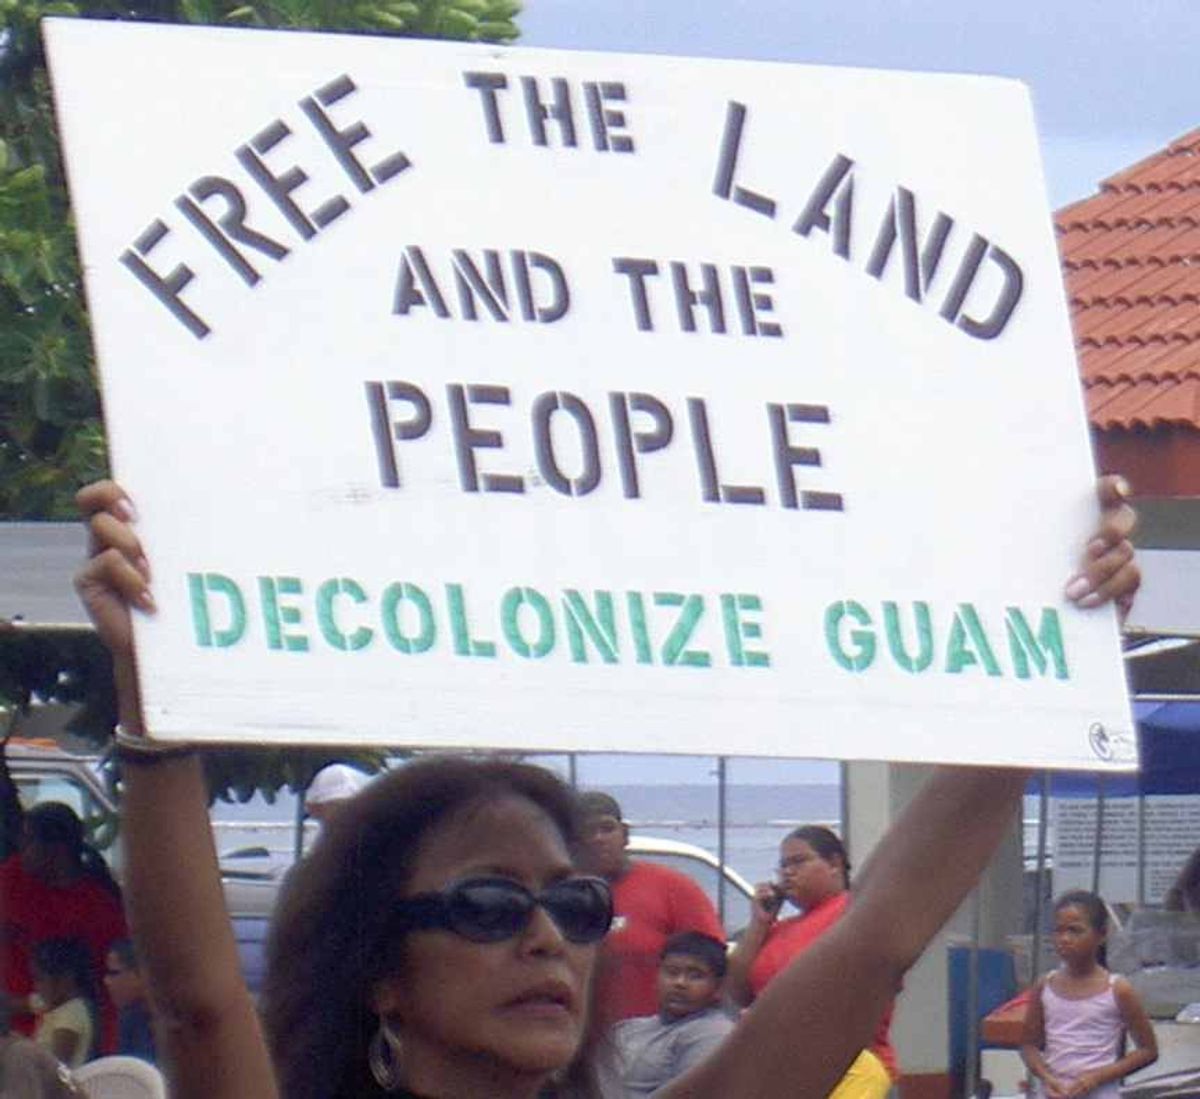 A Look Into Guam's Colonization History